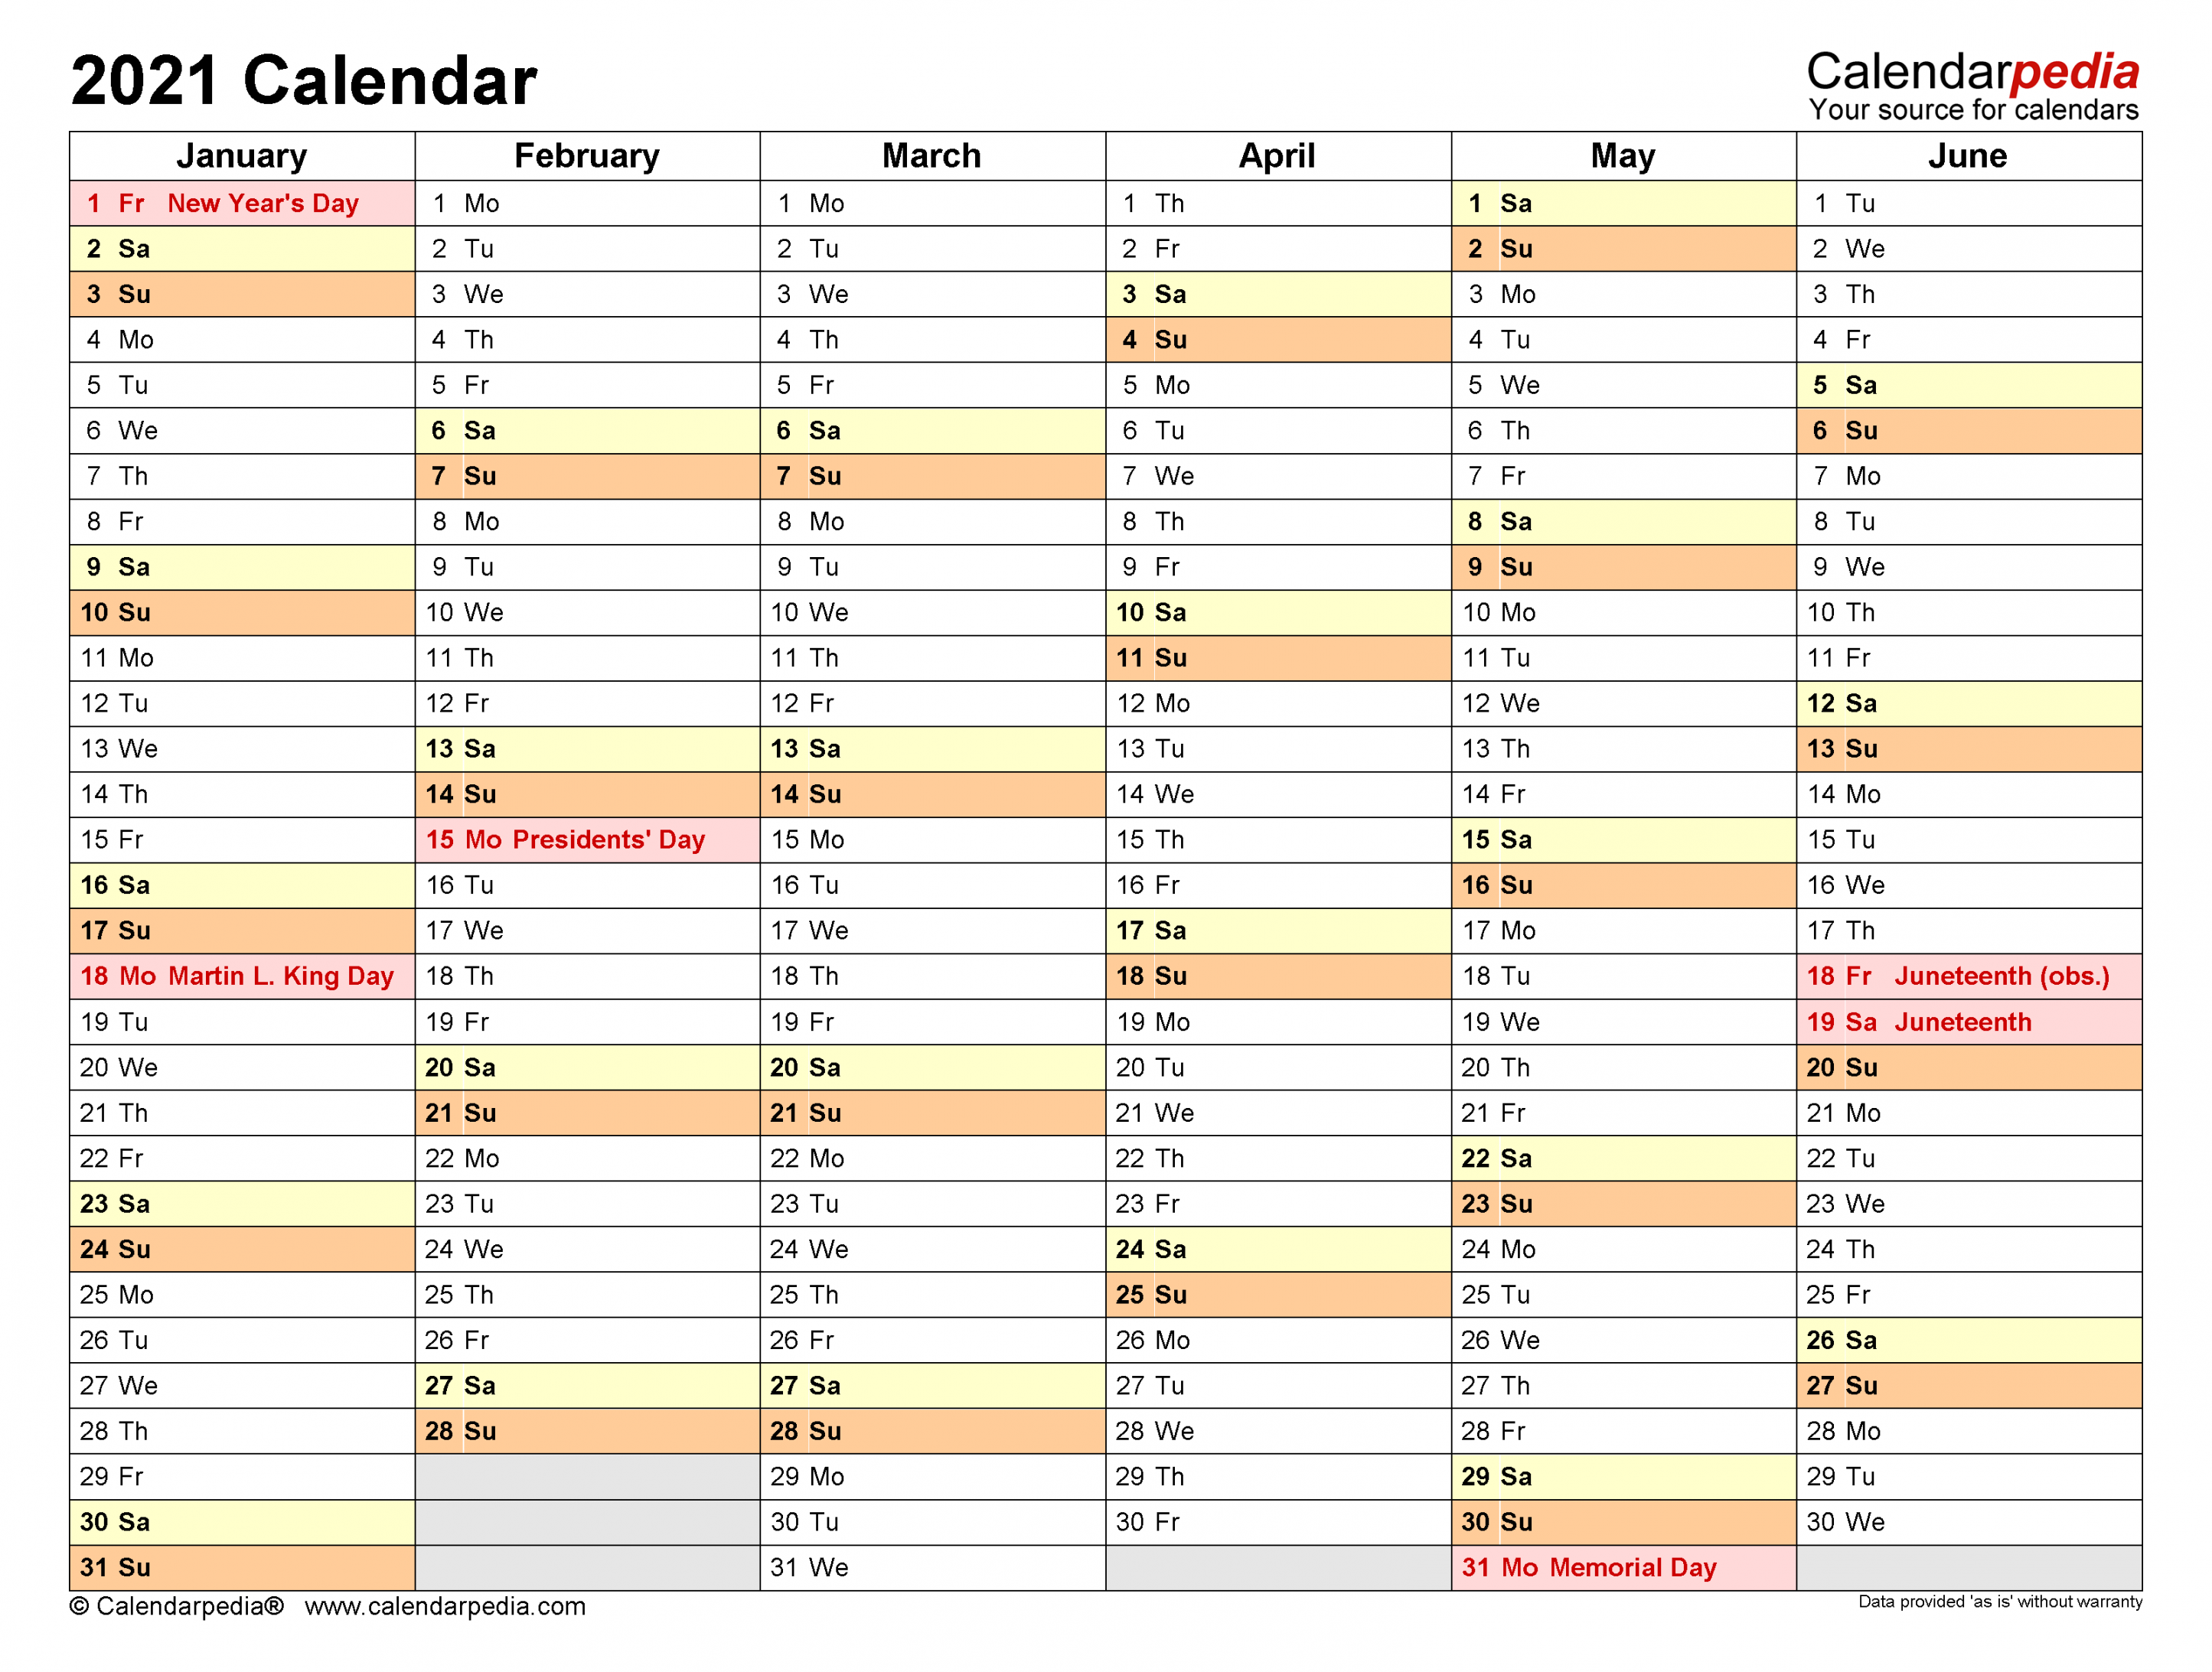 Calendar - Free Printable Word Templates - Calendarpedia